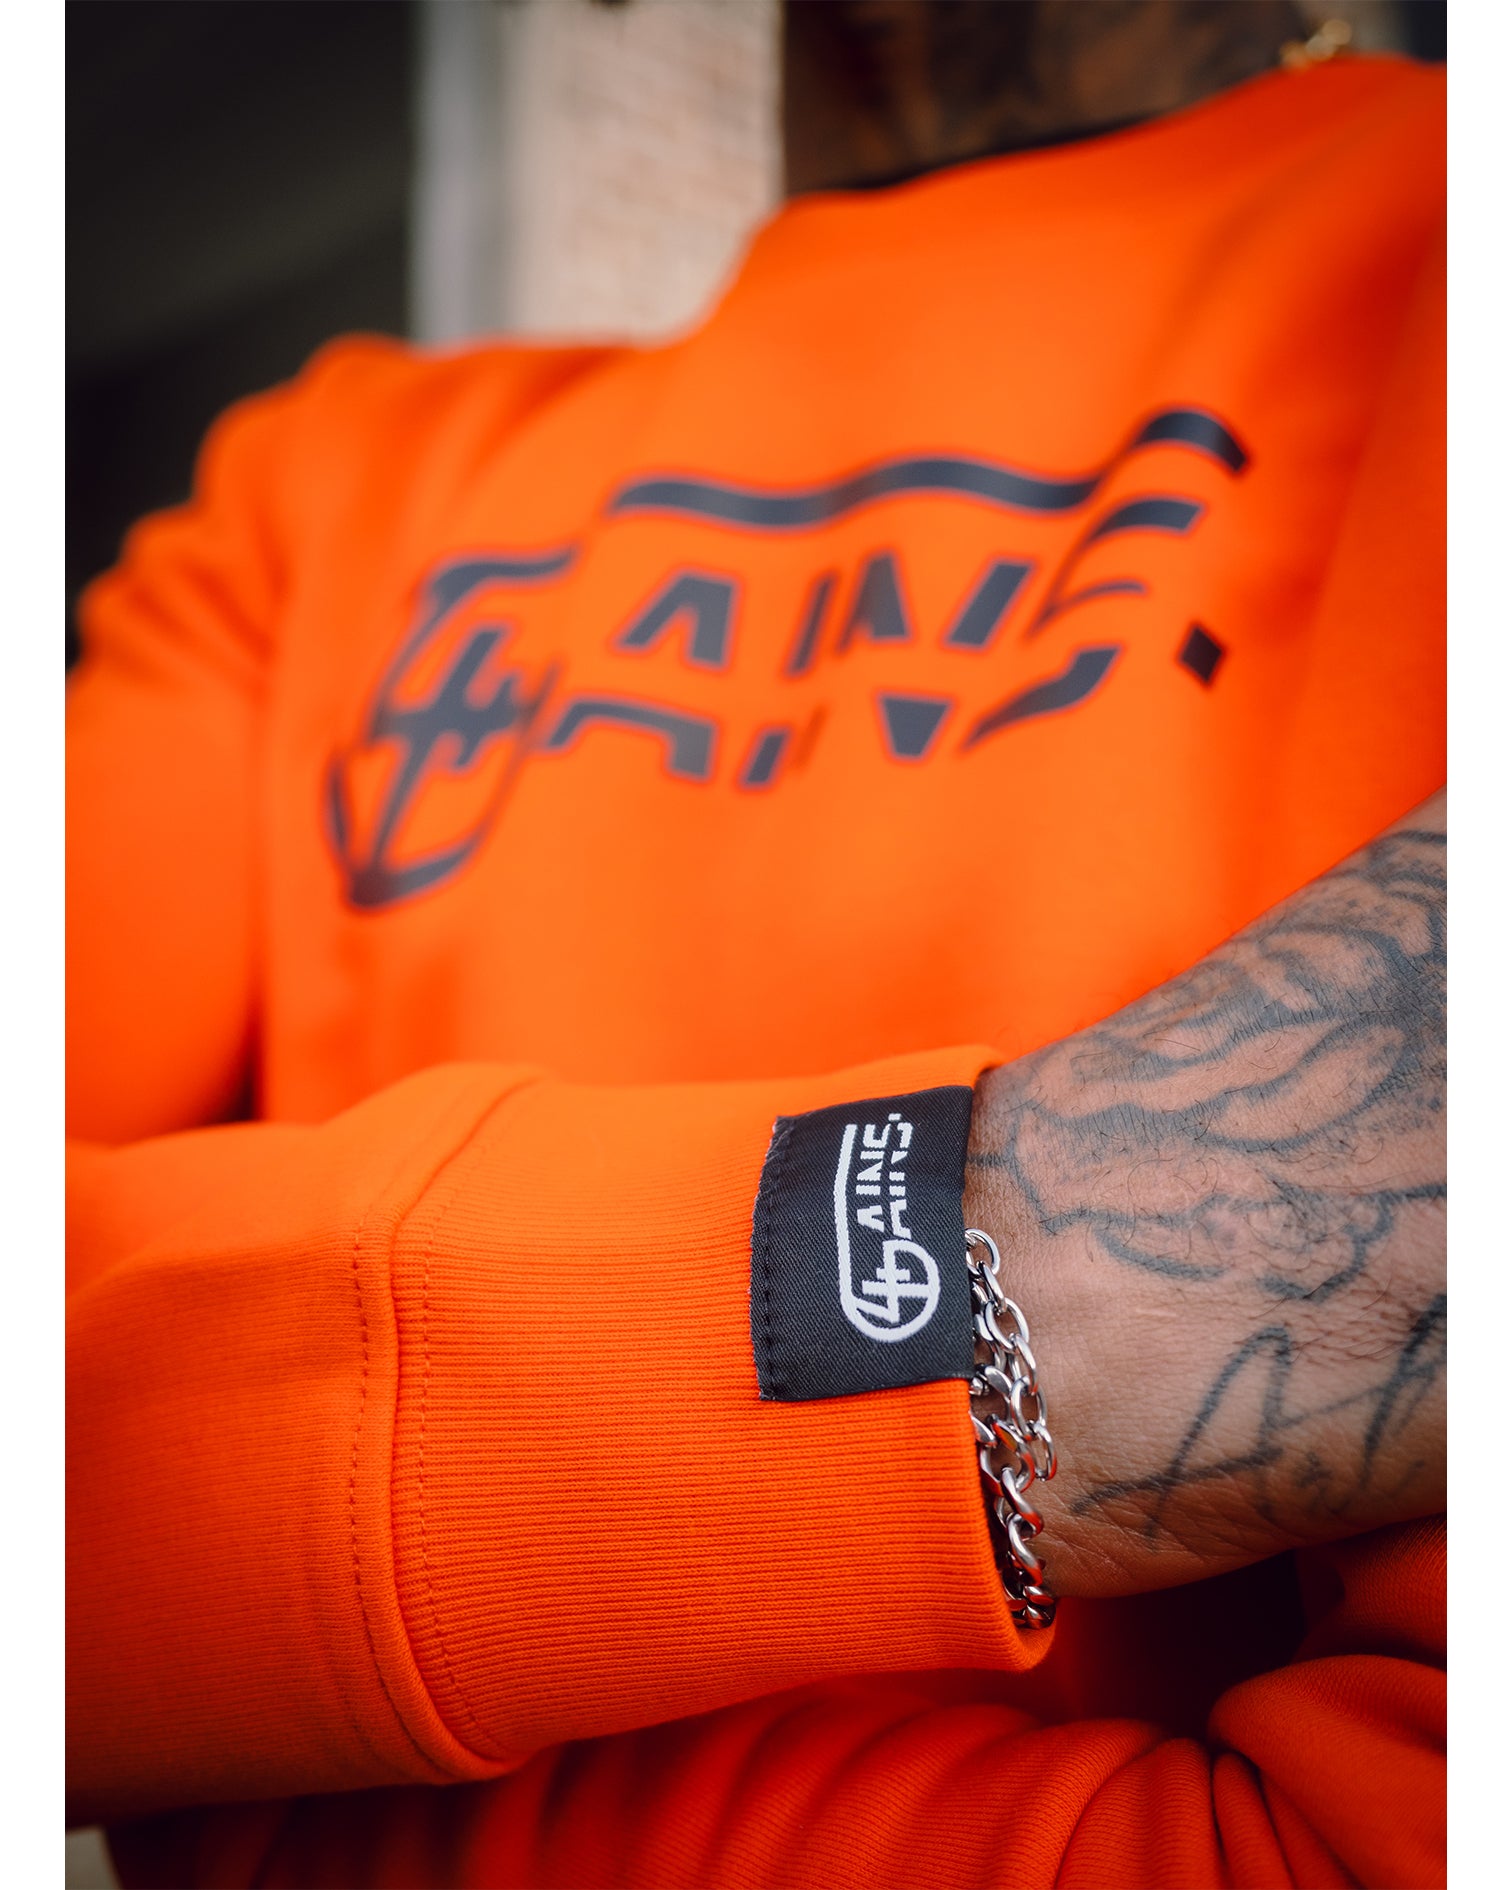 Weblabel am Arm vom unisex 4GAINS orange/black Sweater 